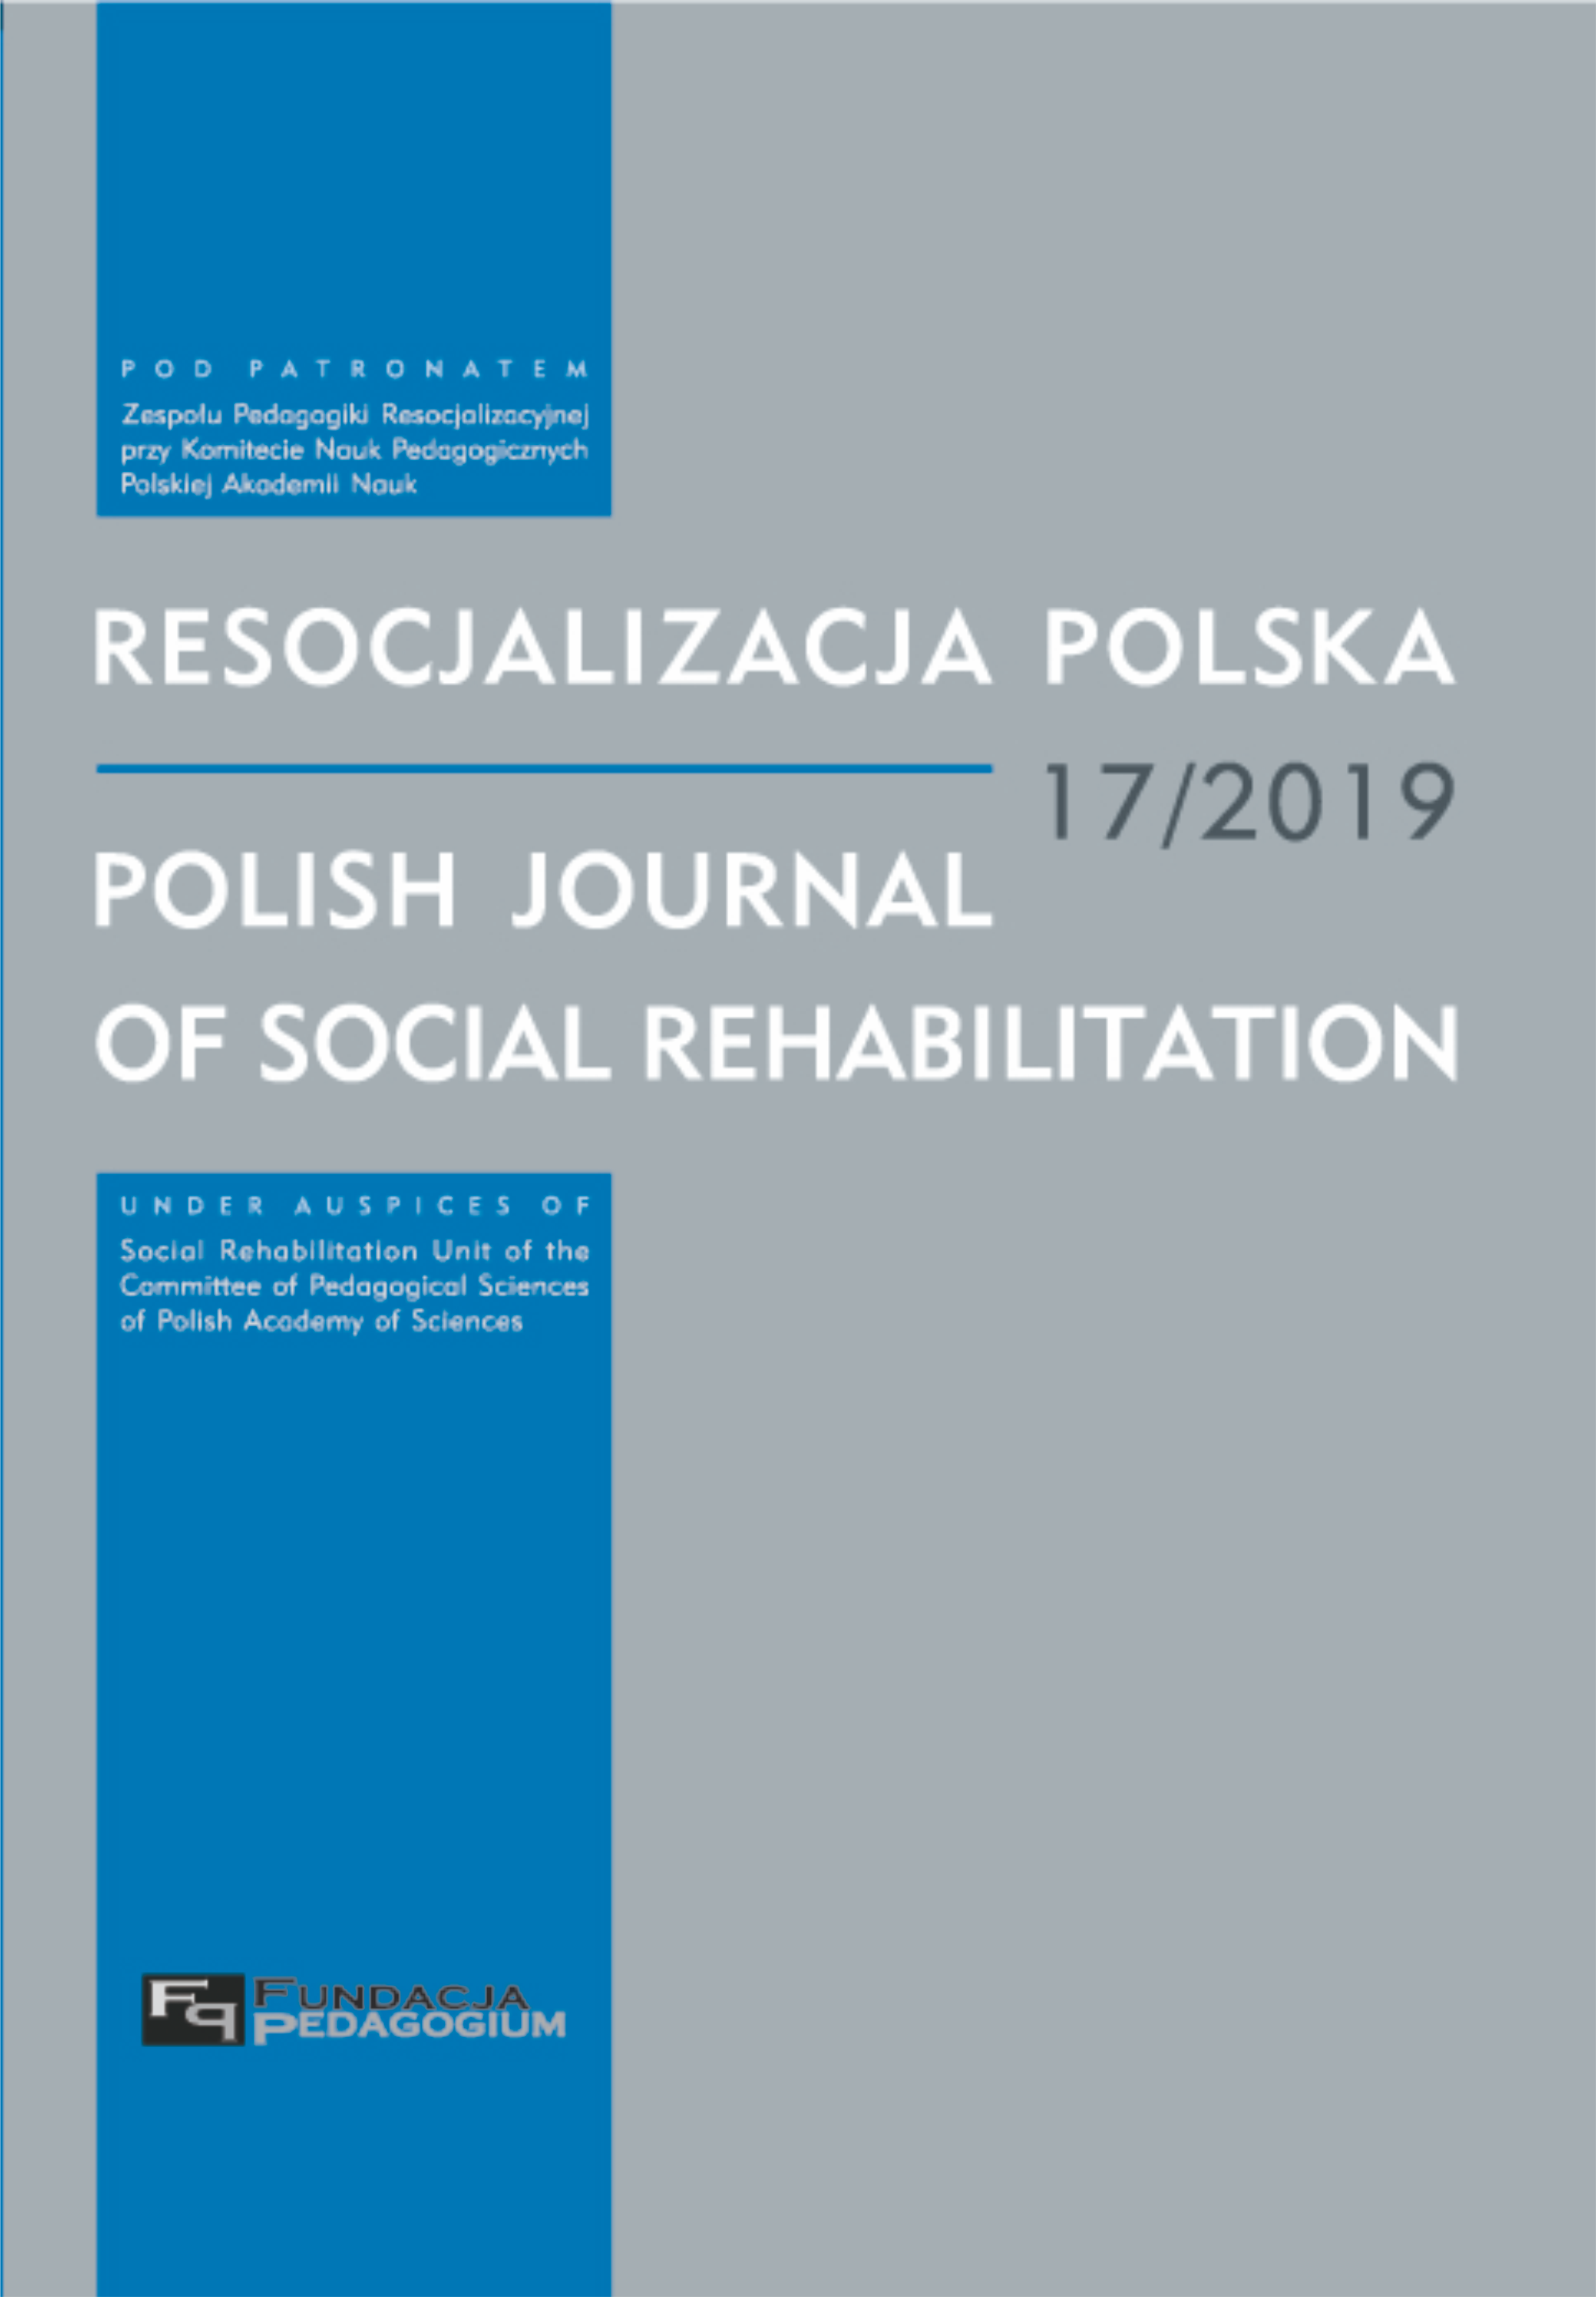 Paweł Kozłowski, Values, Goals and Life Plans of Socially Maladjusted Youth Oficyna Wydawnicza „Impuls”, Cracow 2016. p. 208 Cover Image